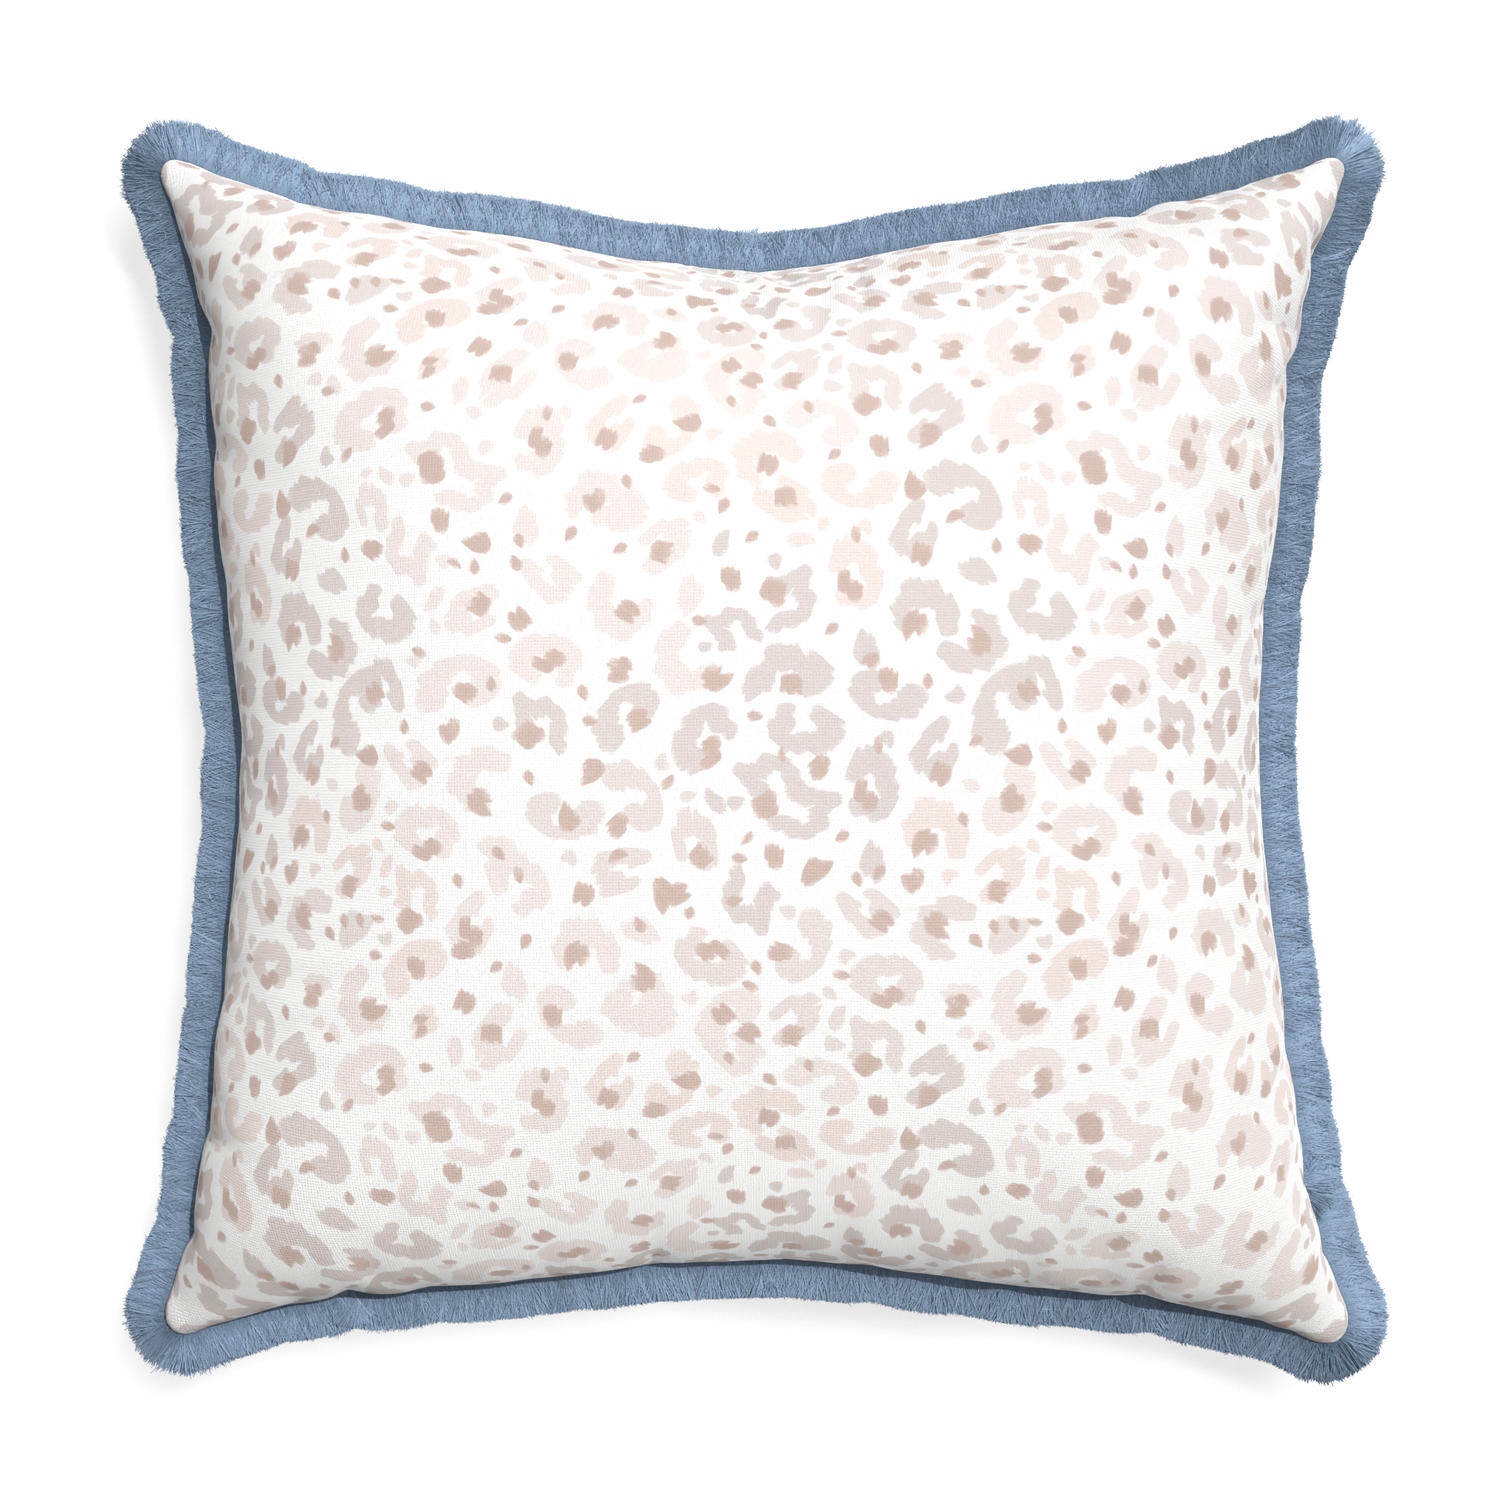 Euro-sham rosie custom pillow with sky fringe on white background